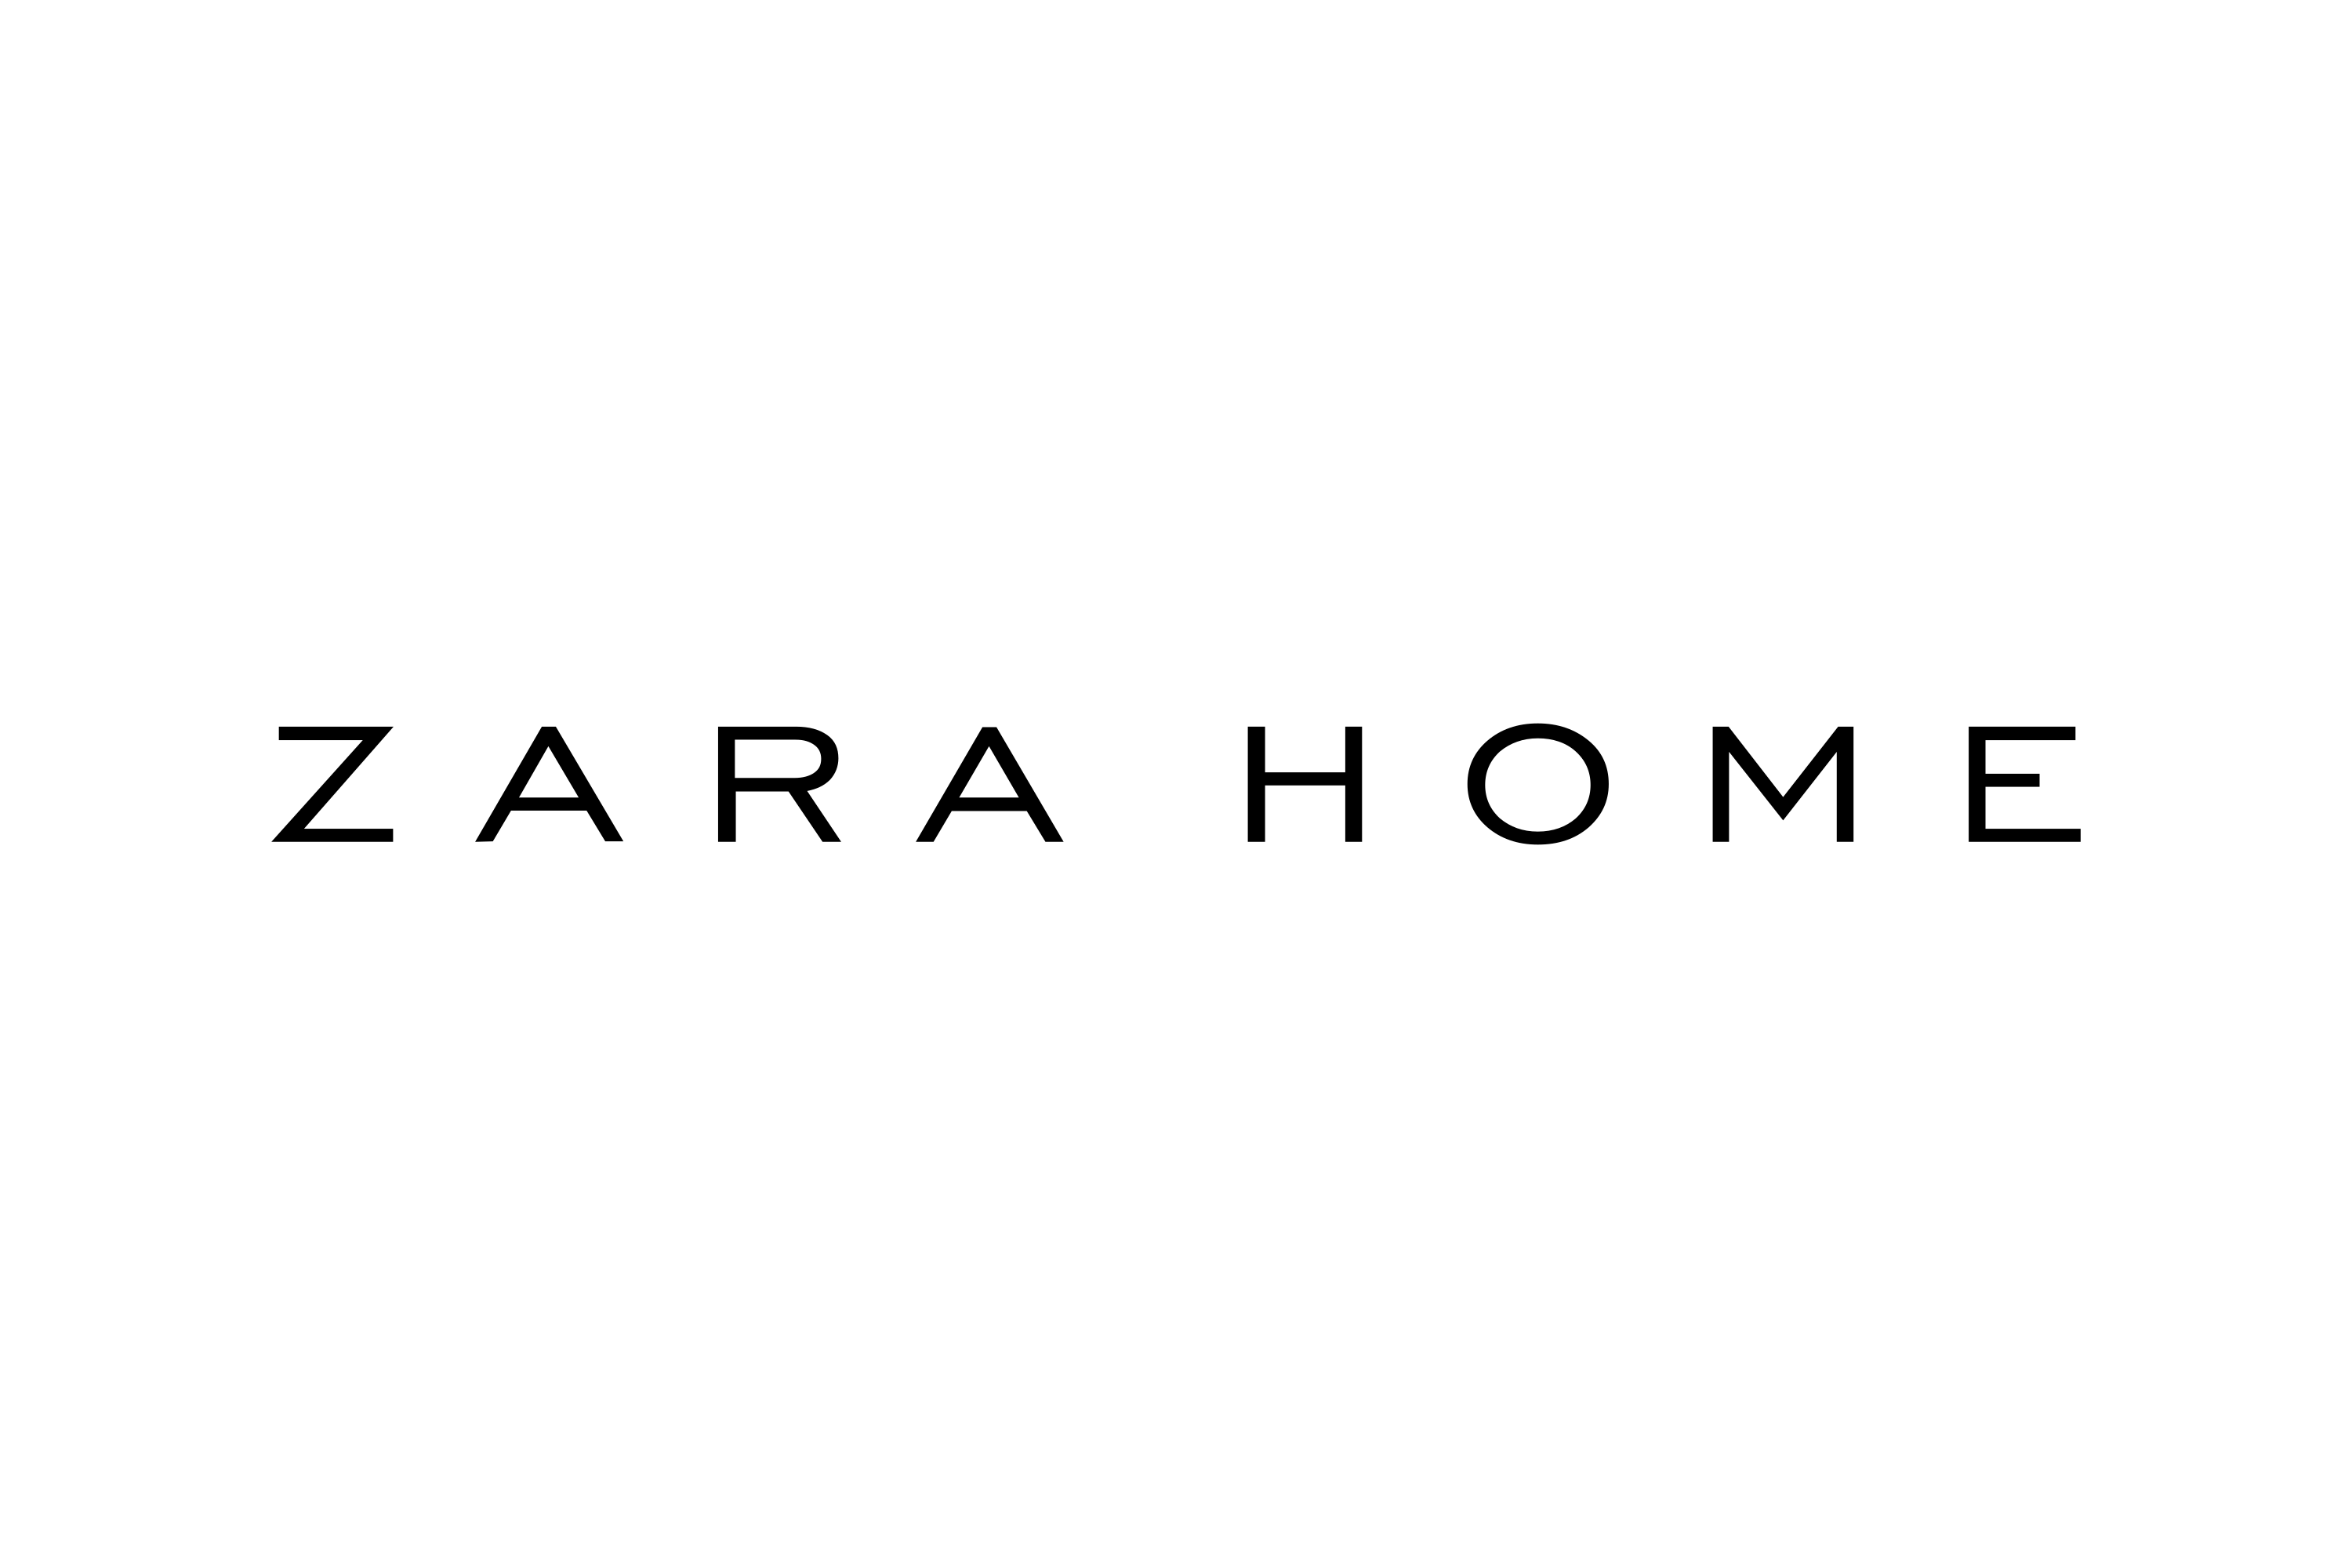 https://download.logo.wine/logo/Zara_Home/Zara_Home-Logo.wine.png